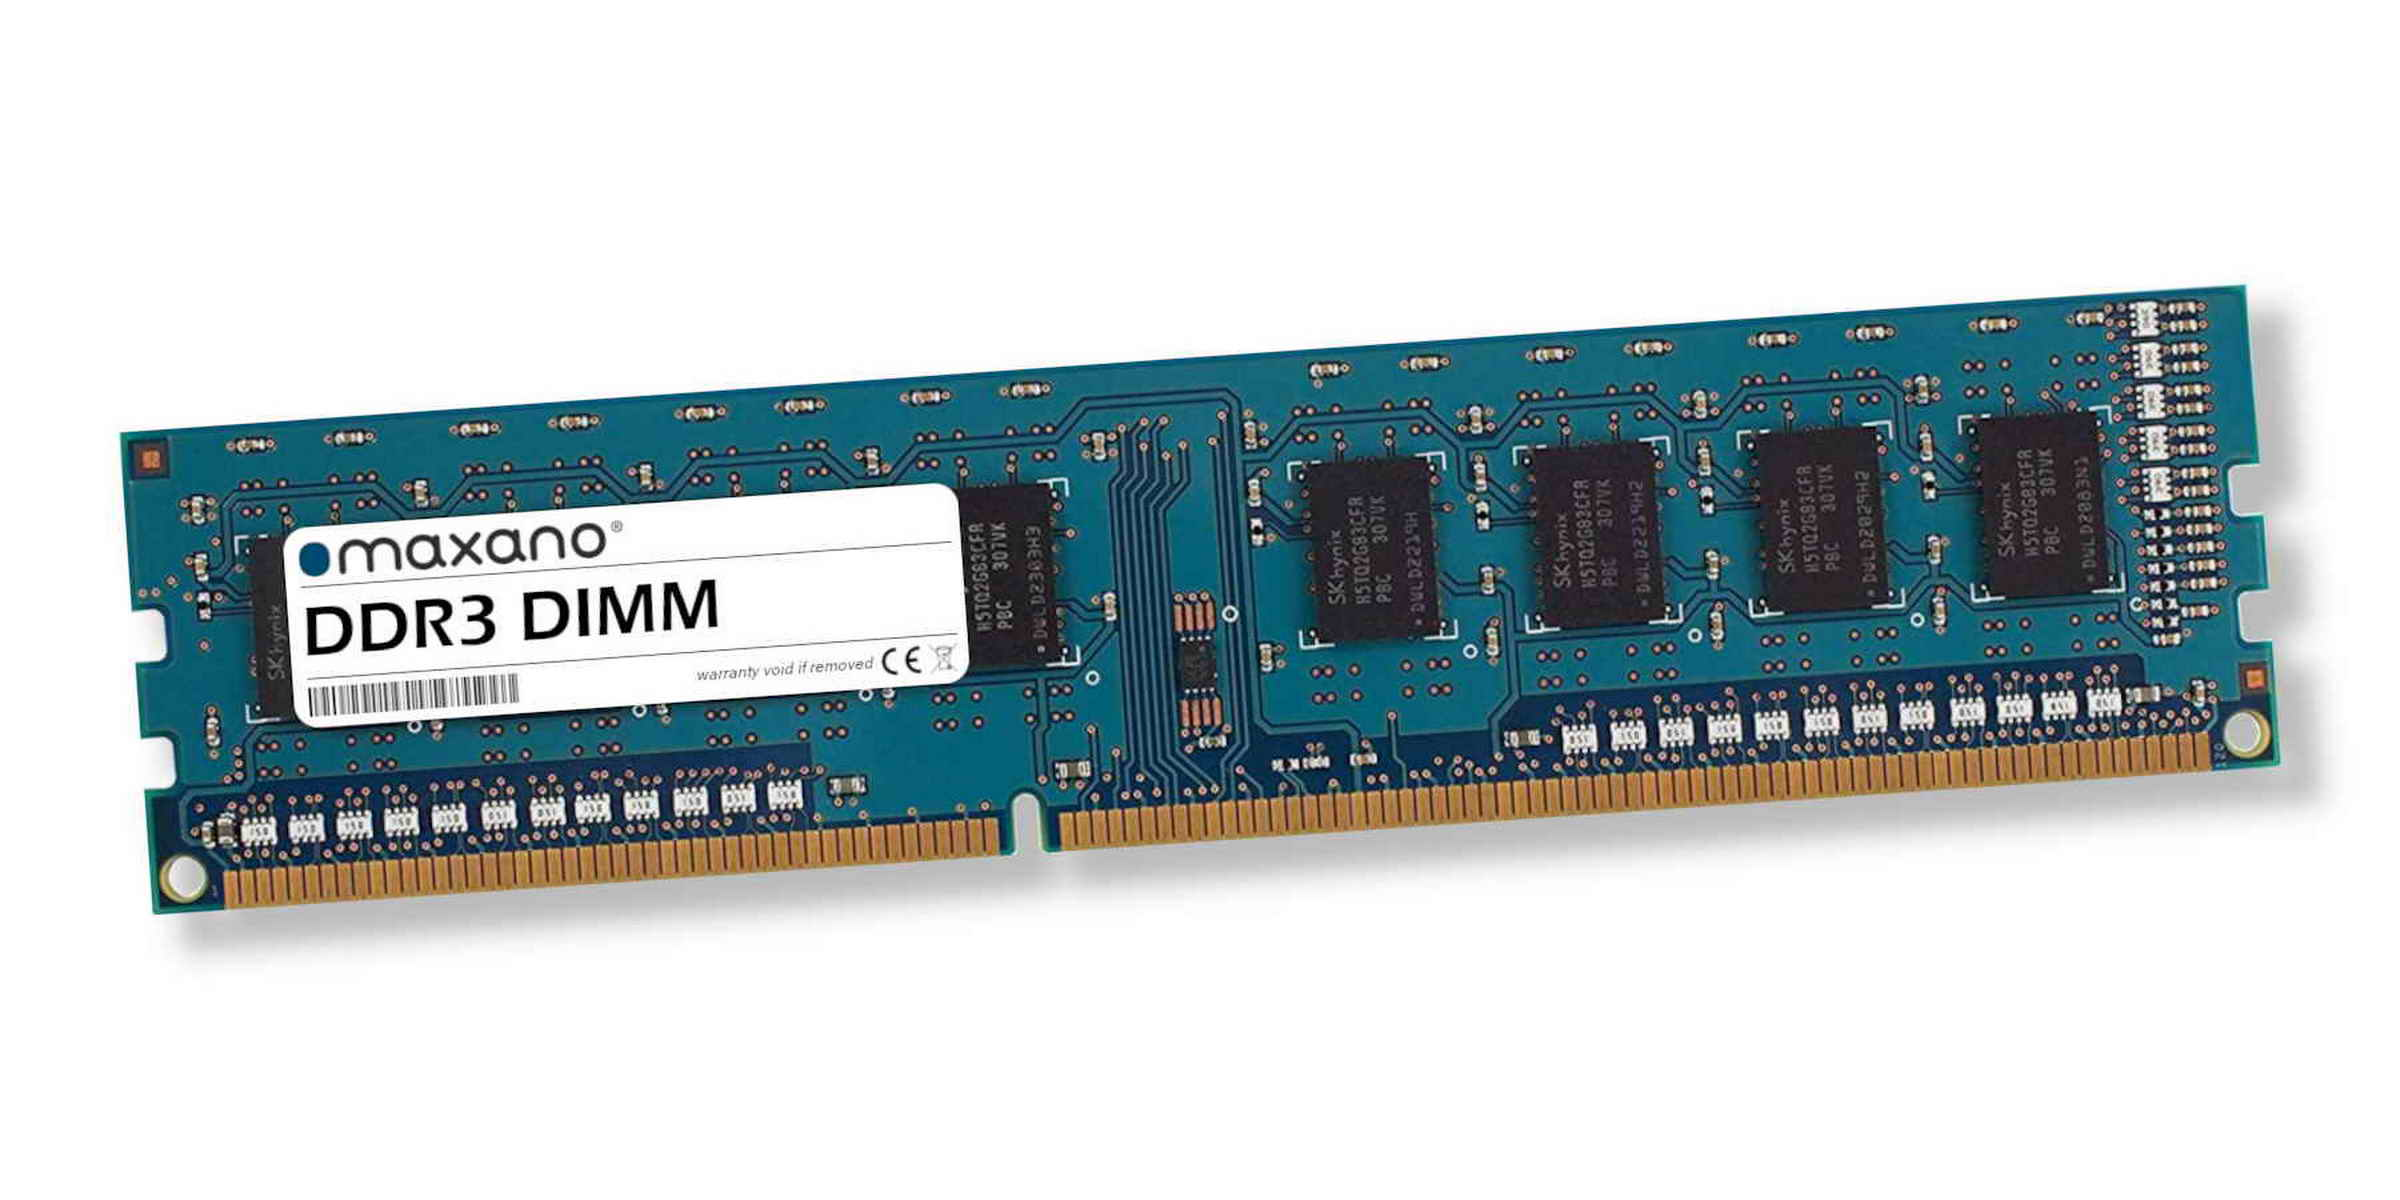 Medion 8 RAM 8GB MAXANO Arbeitsspeicher E1101D GB DIMM) für (PC3-12800 SDRAM Akoya